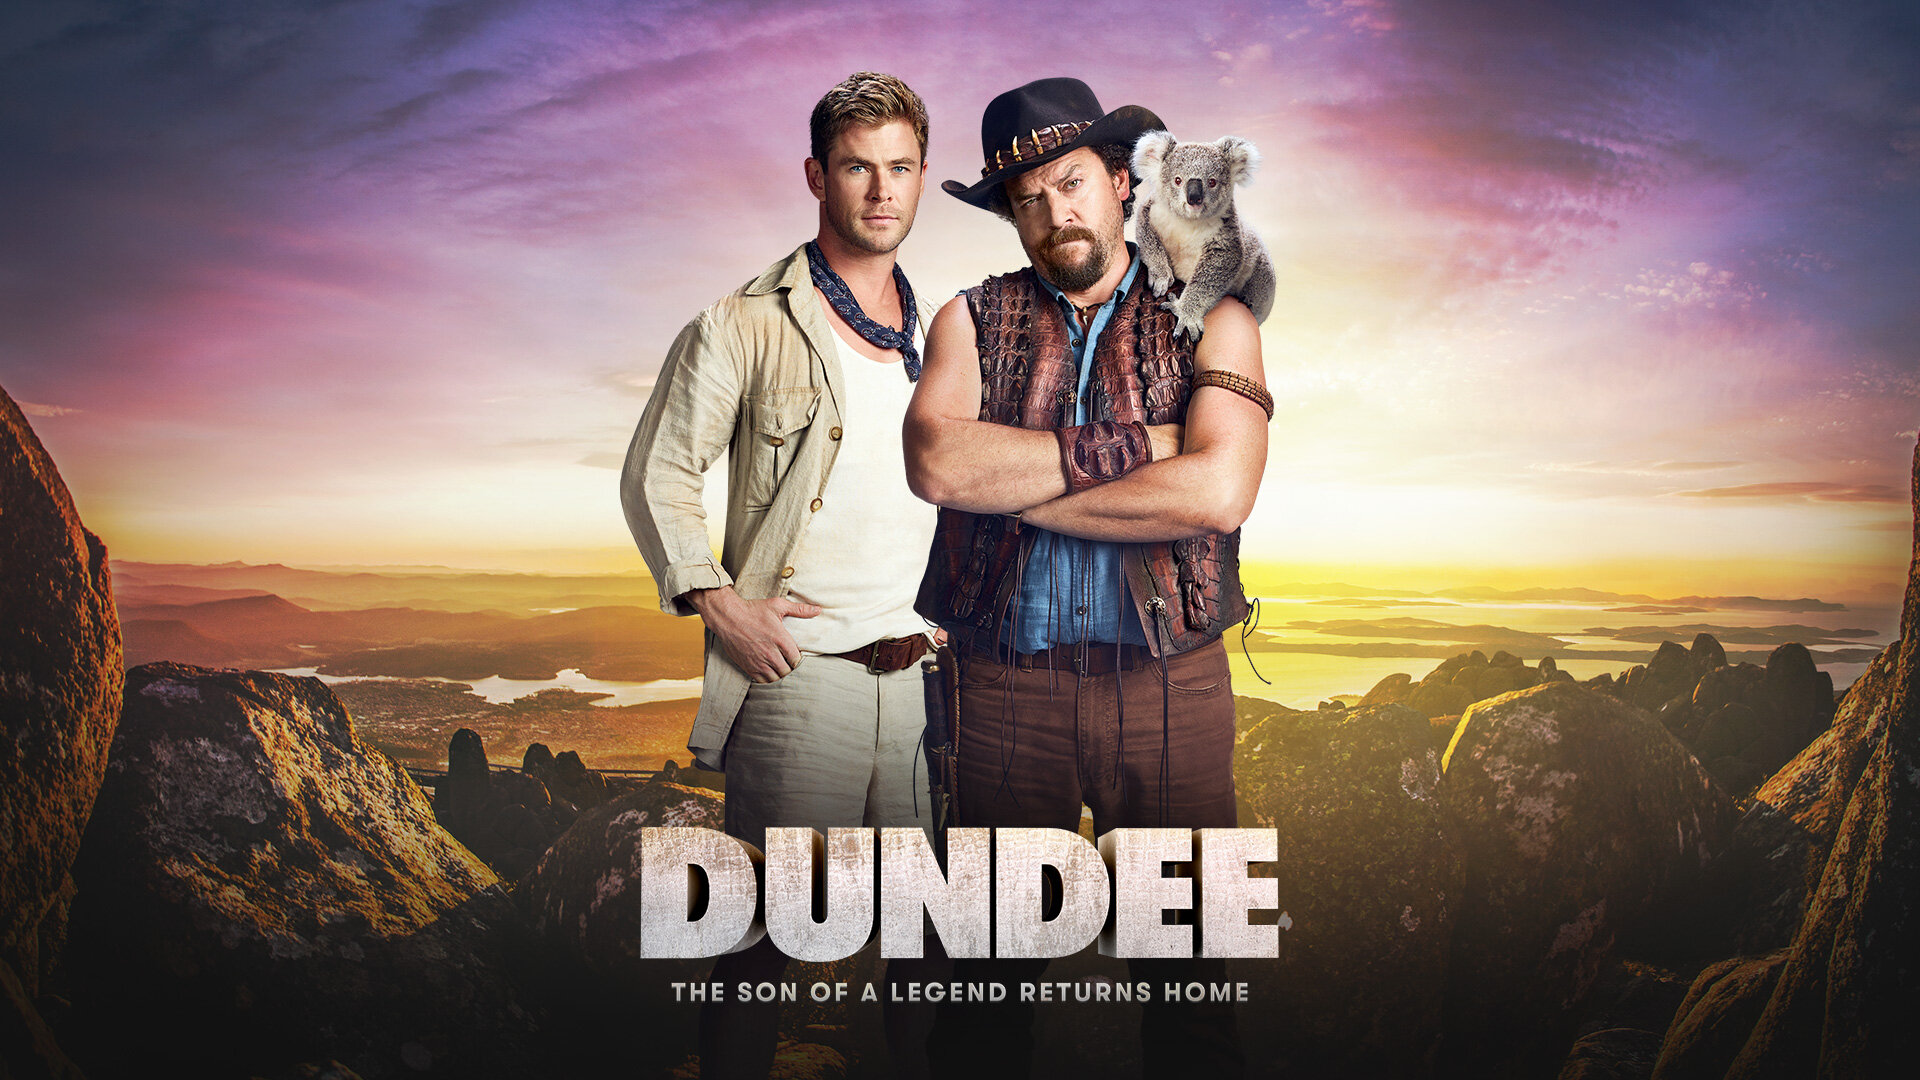 Данди: сын легенды возвращается домой. Tourism Australia: Dundee - the son of a Legend Returns Home. Данди Индия.